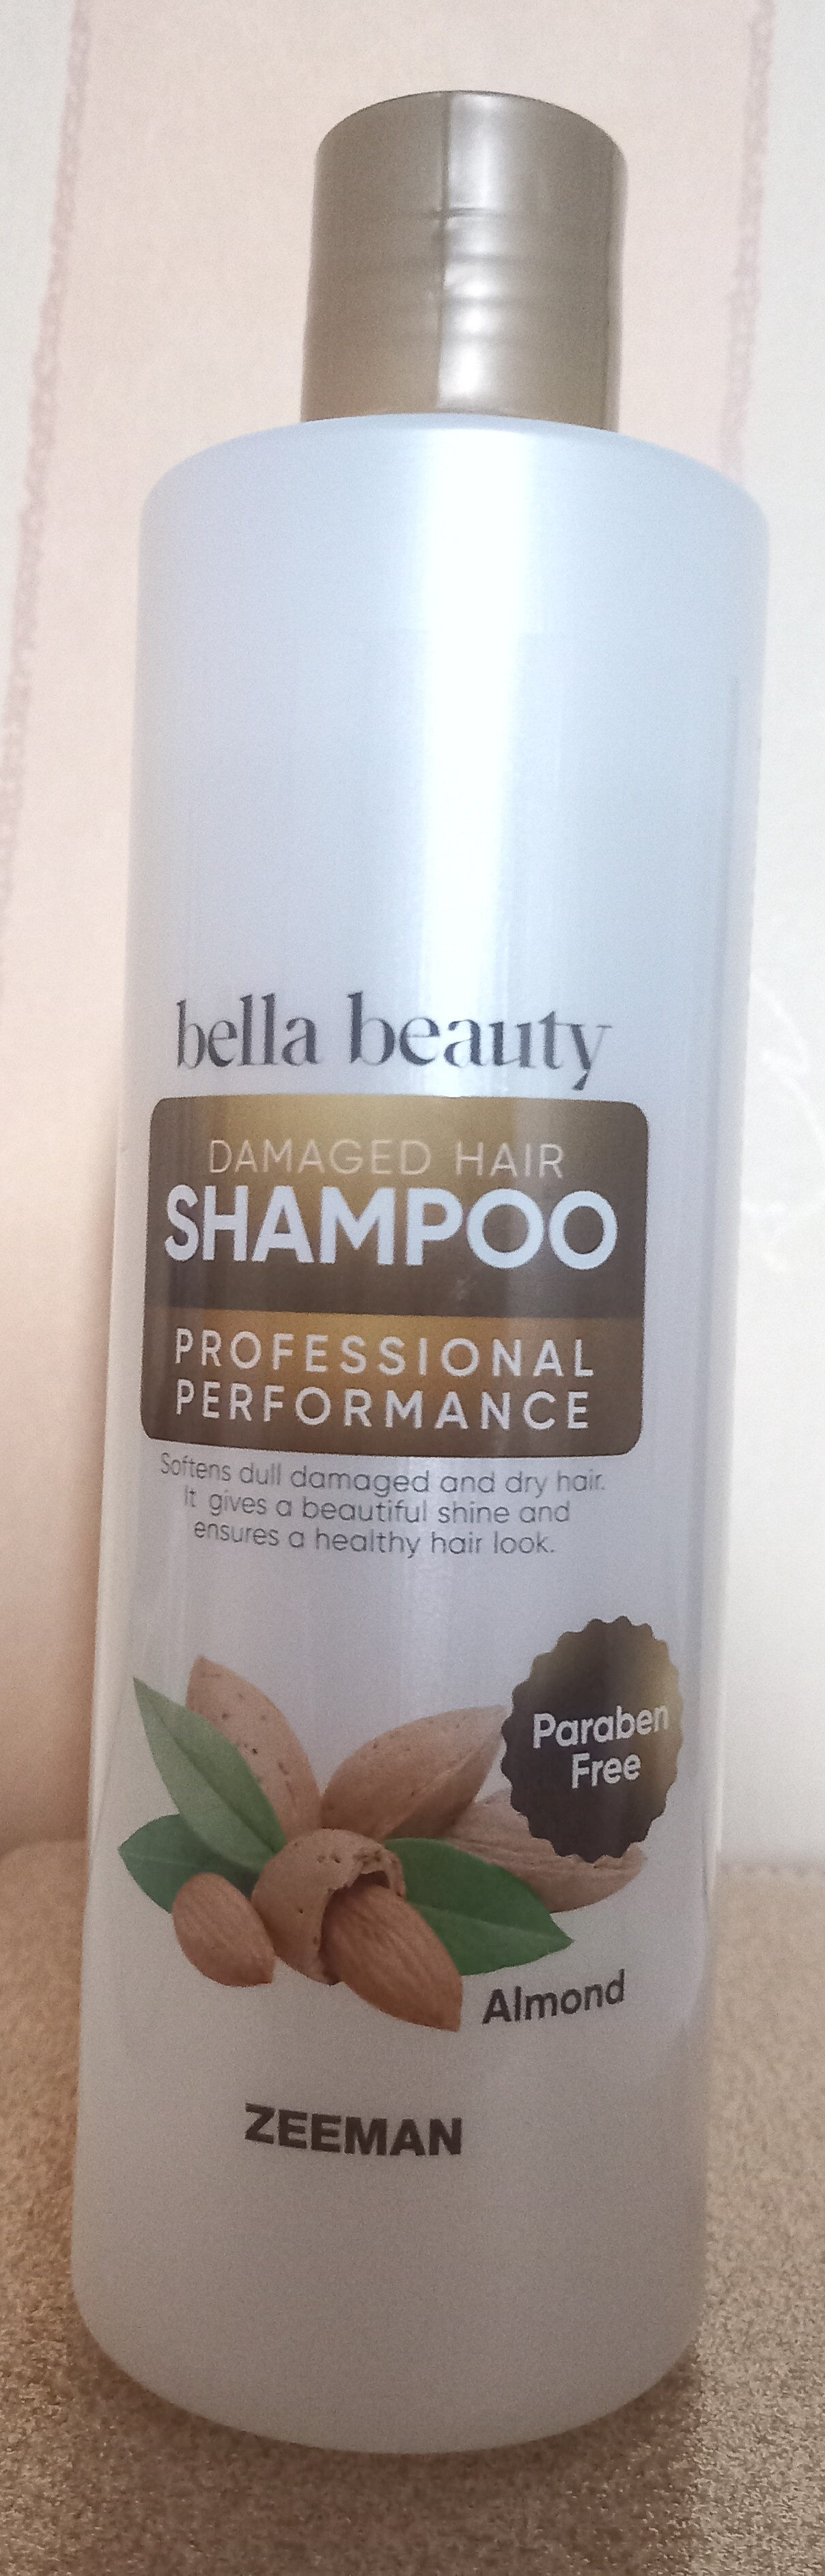 Bella Beauty DAMAGED HAIR SHAMPOO PROFESSIONNAL PERFORMANCE - Produit - fr